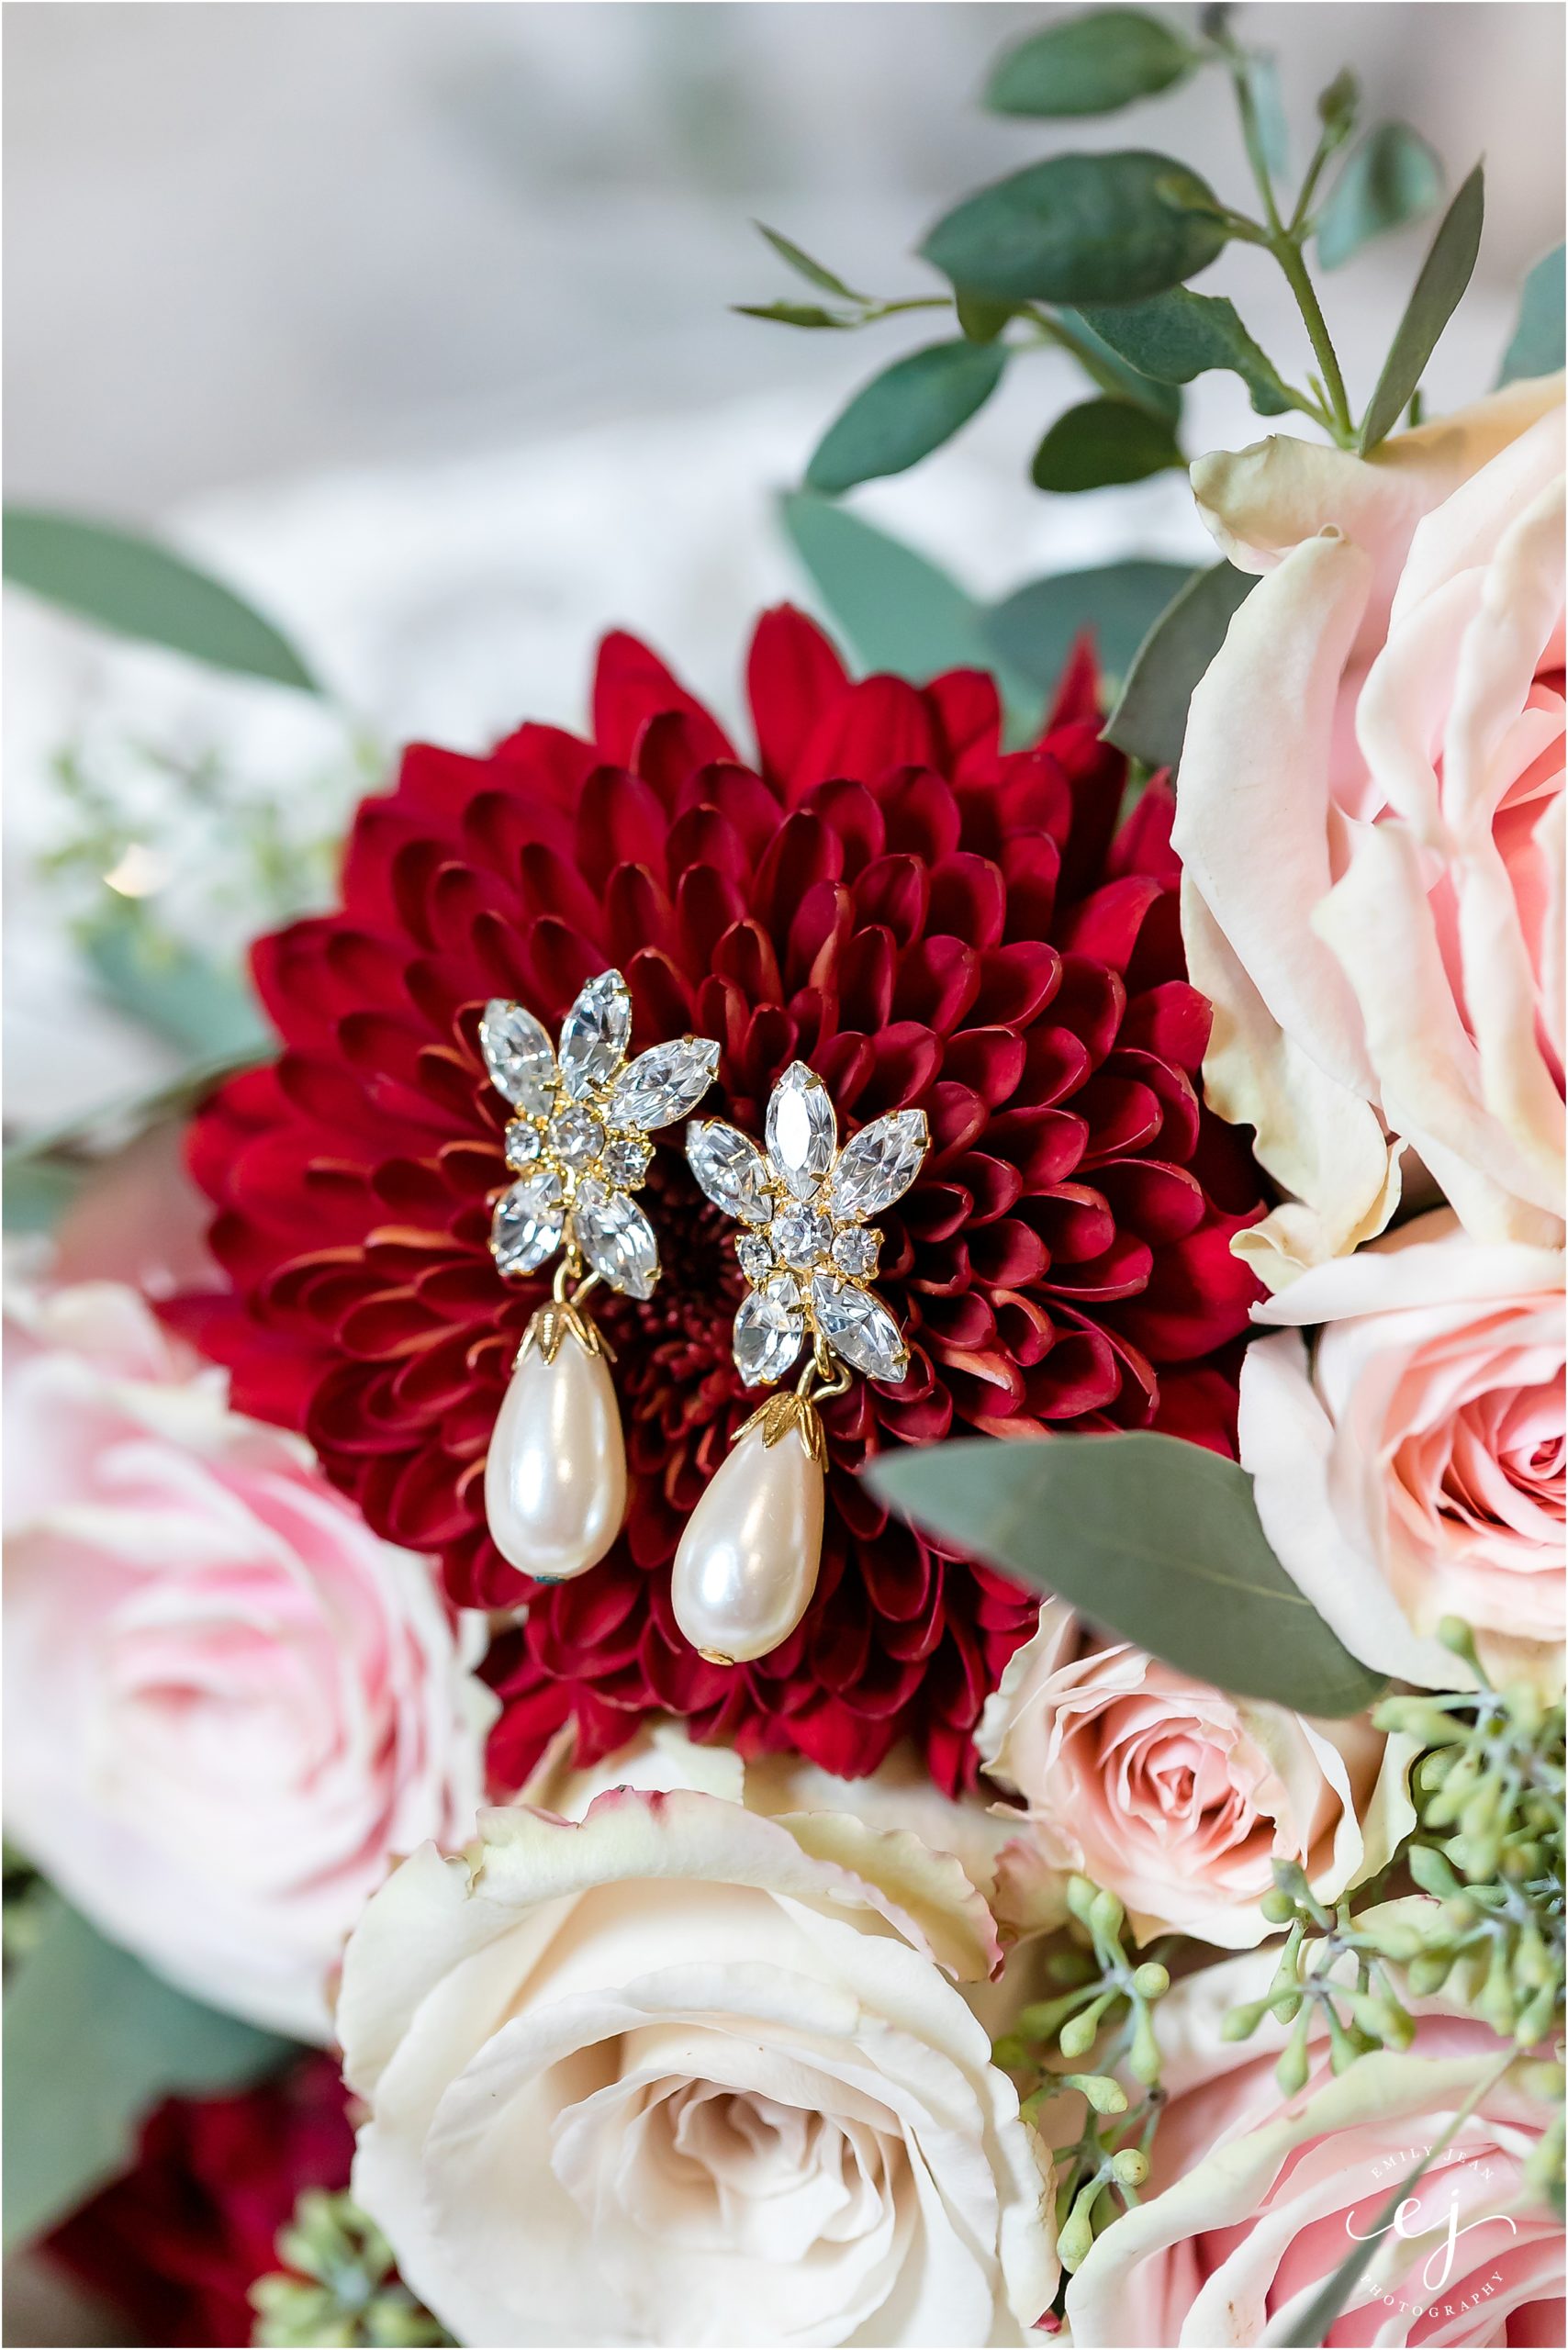 vintage sparkly and pearl earrings on floral bouquet winnebago springs minnesota wedding